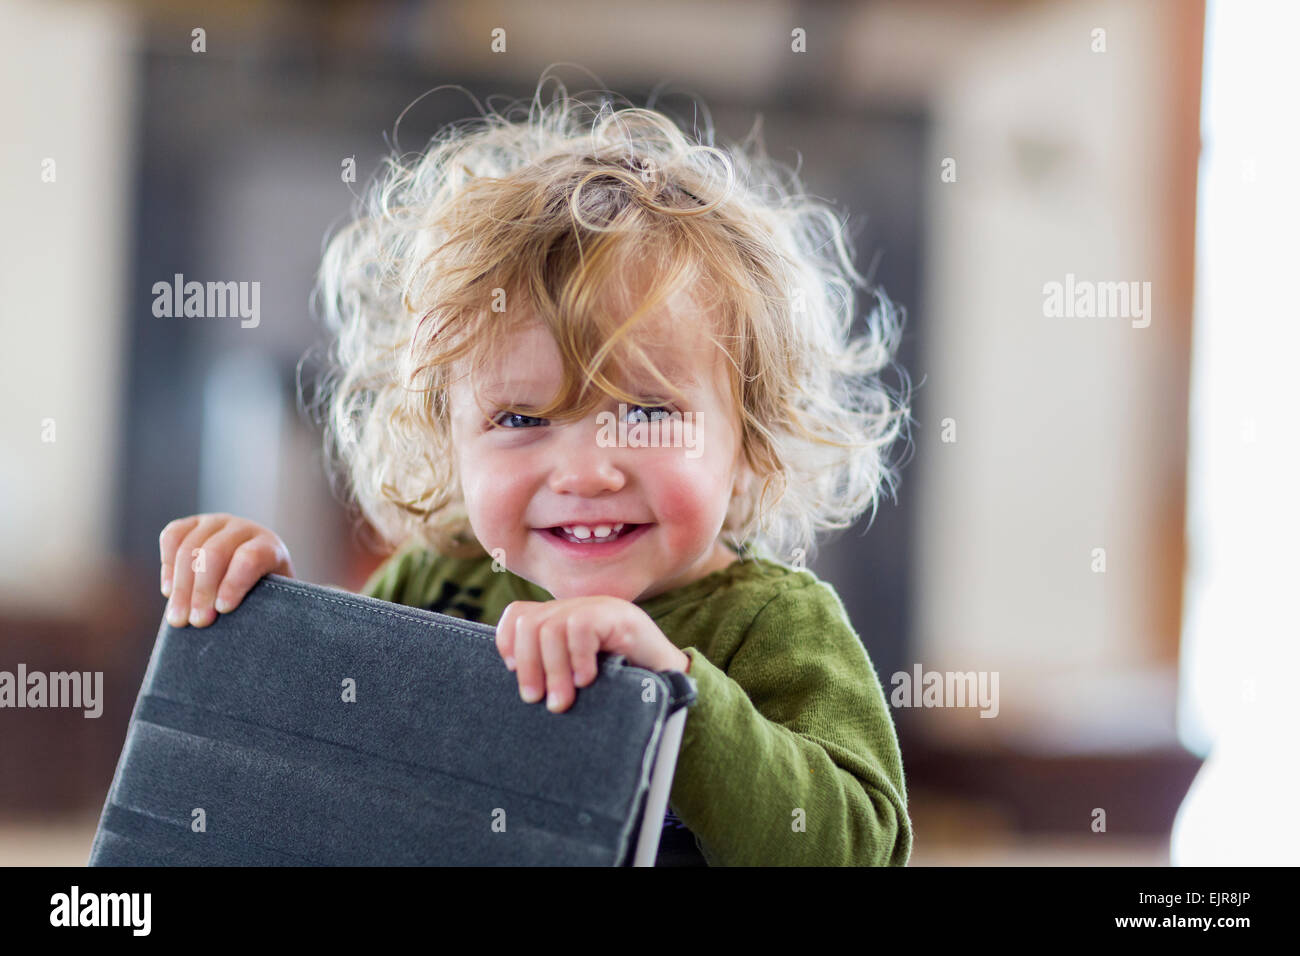 Caucasian baby boy holding digital tablet Stock Photo